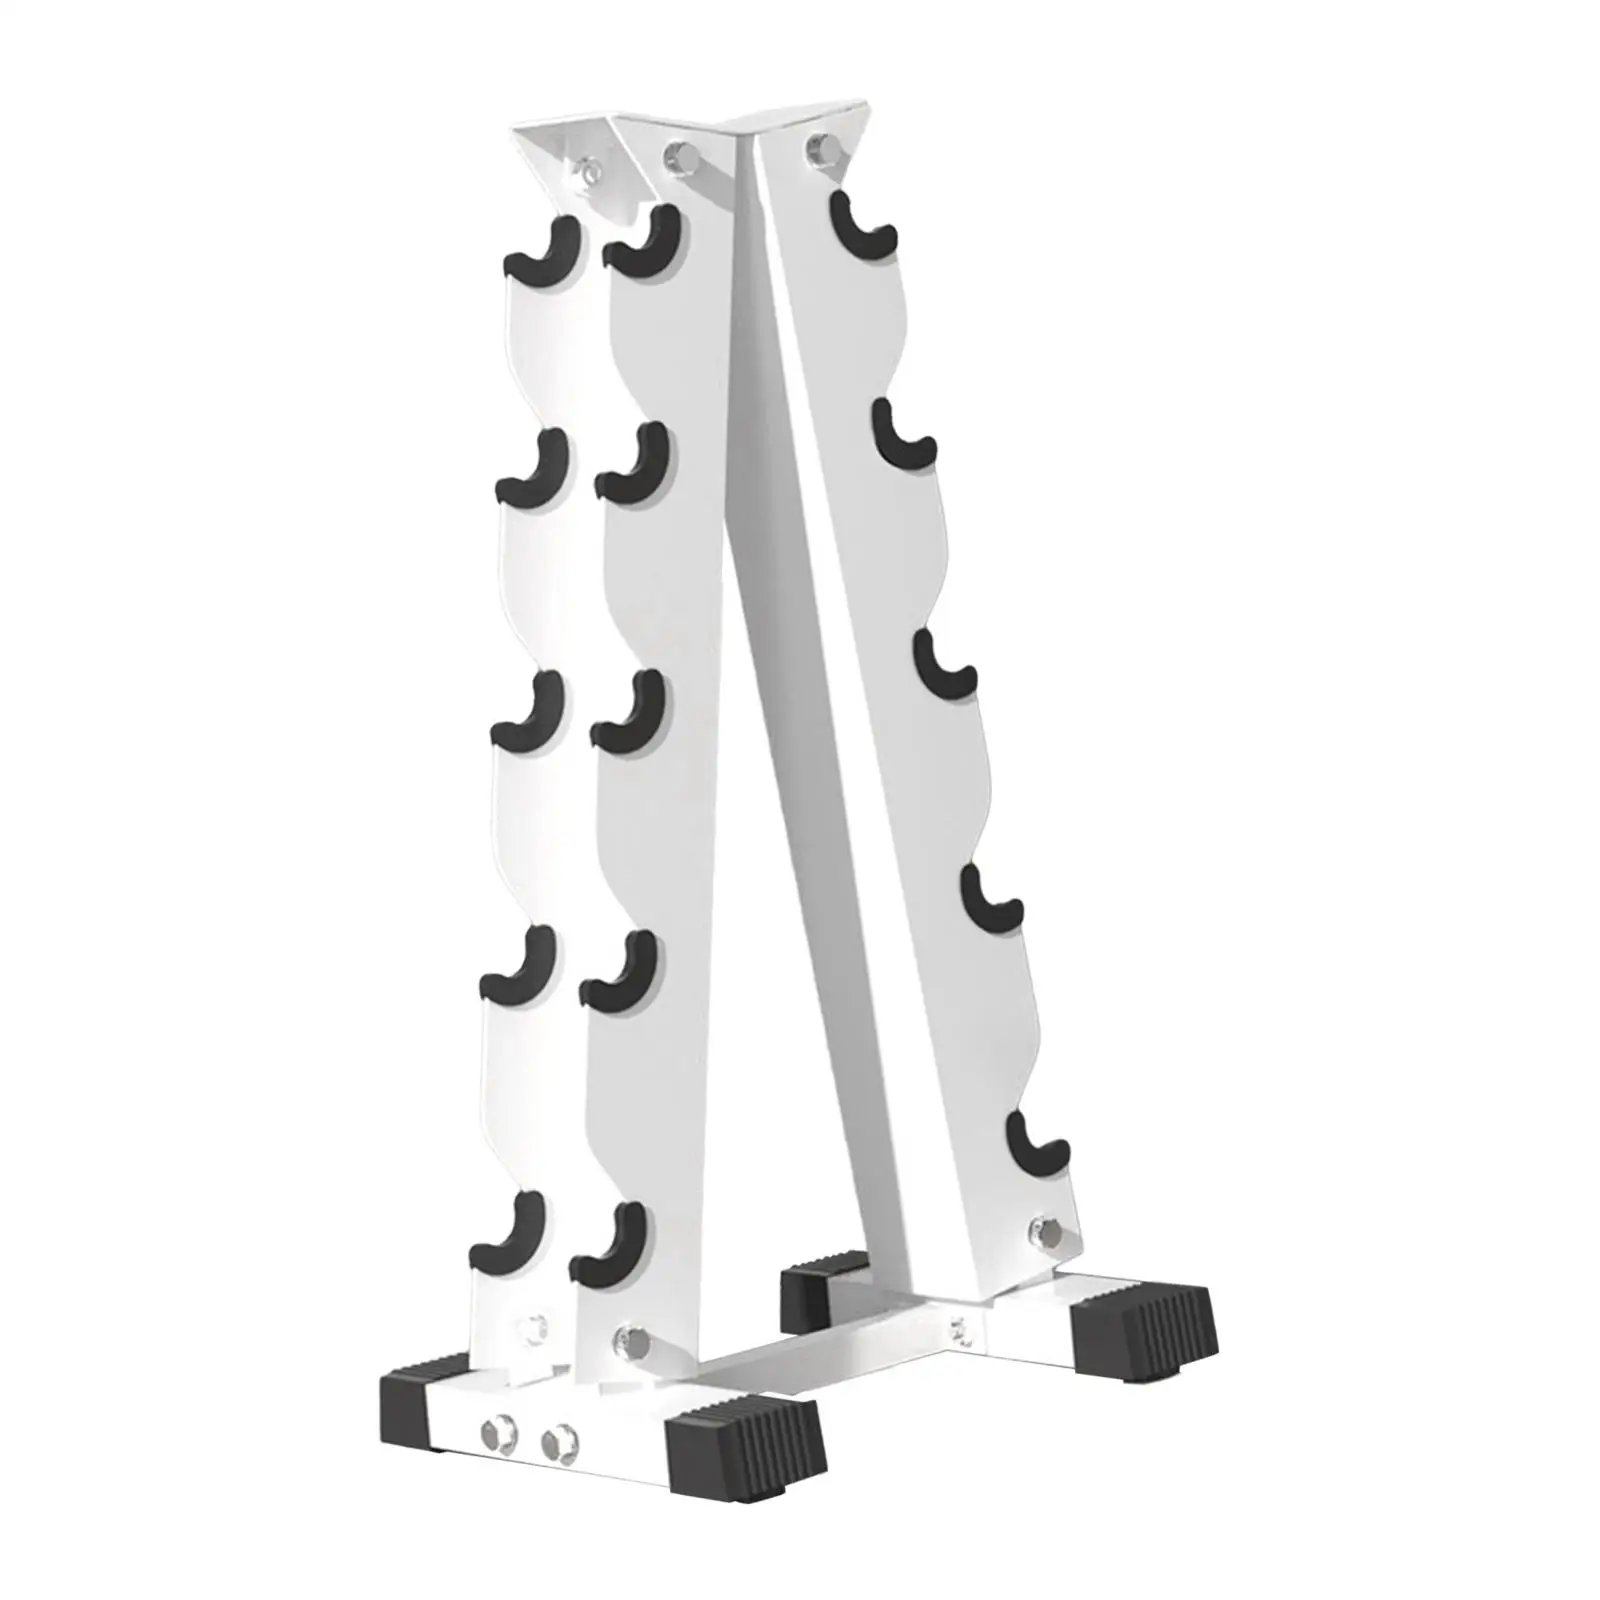 Dumbbell Rack Sturdy Dumbbell Storage Holder for Home Office Weight Training